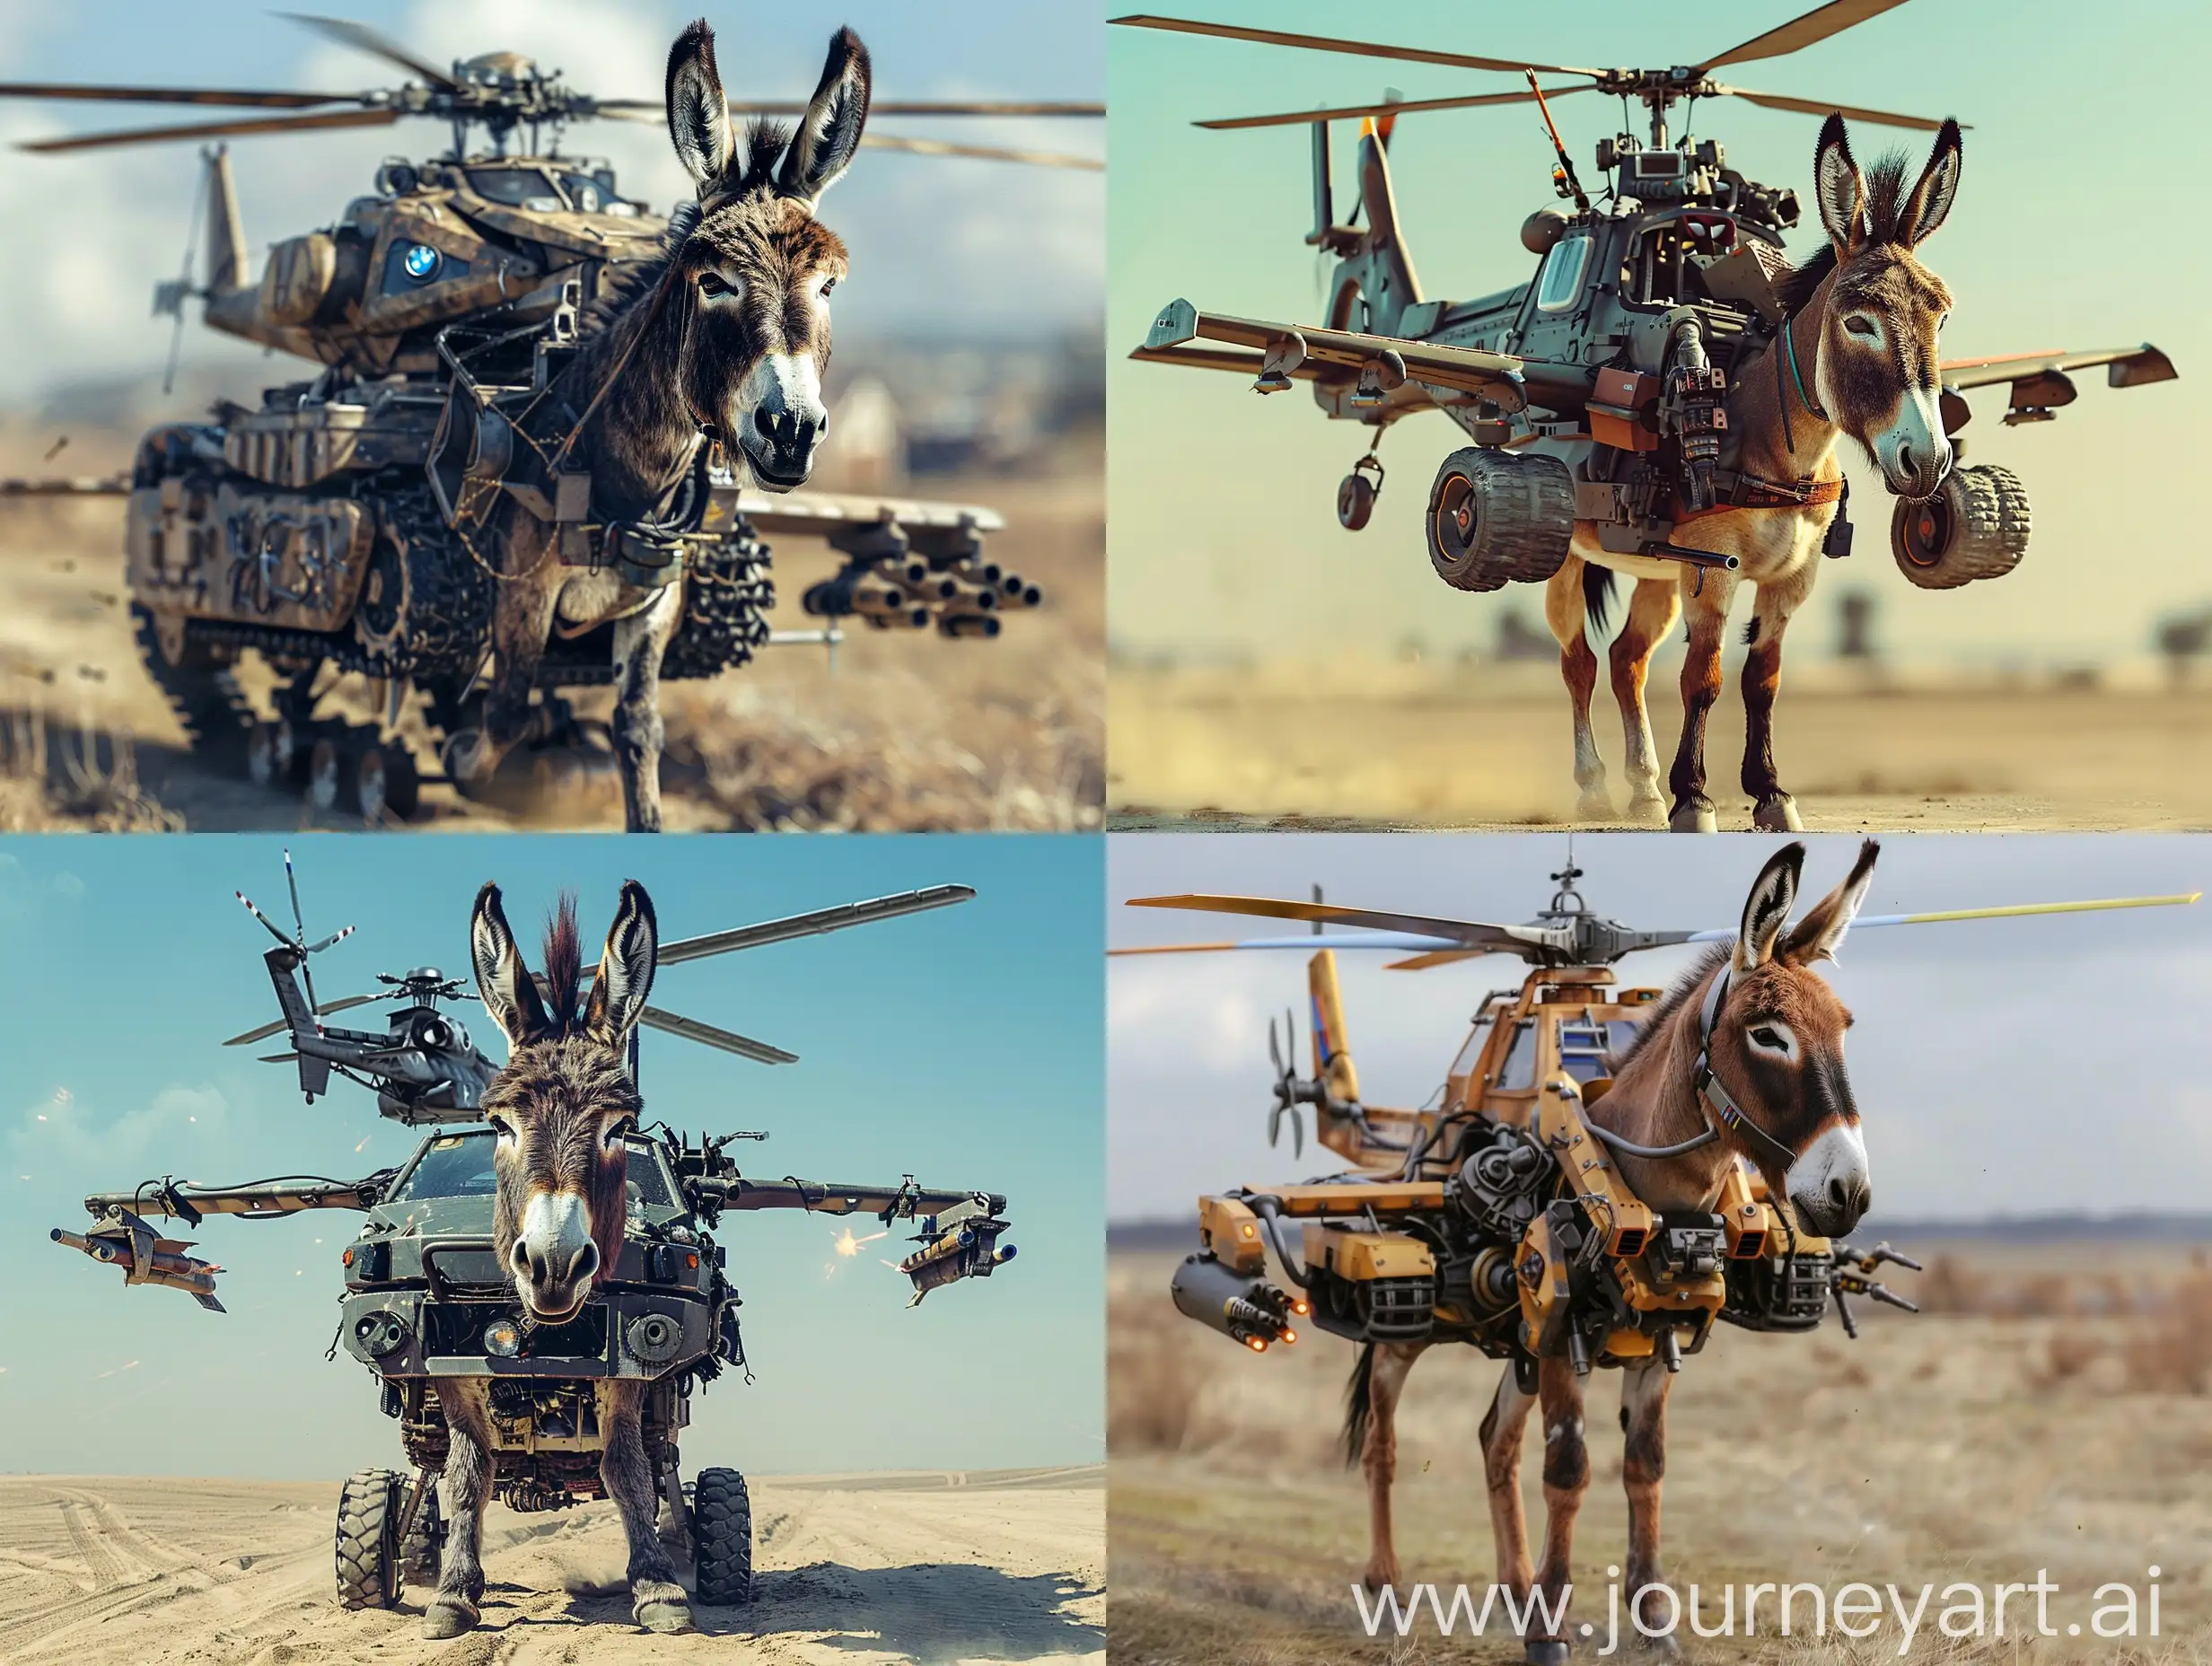 Radik-the-Donkey-Transforms-into-a-MultiFunctional-Vehicle-Shooting-BMWs